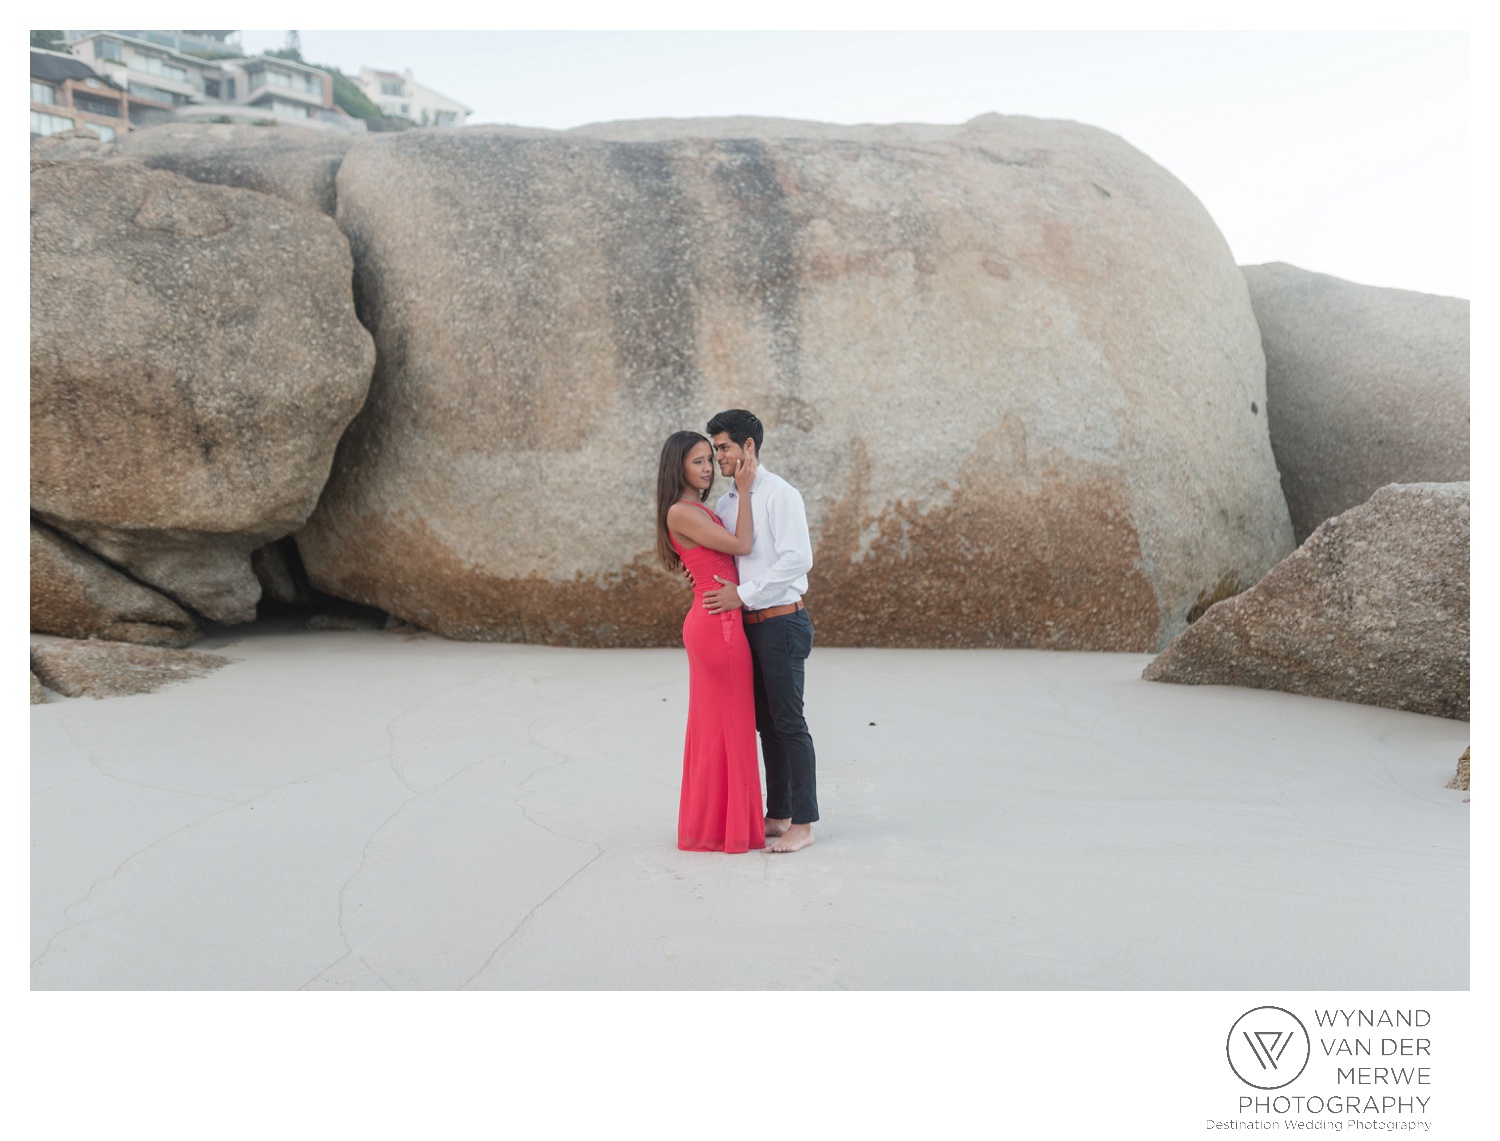 WvdM_engagementshoot_engaged_couple_prewedding_llandudno_cliftonbeach_beach_formal_southafrica_weddingphotographer_greernicolas-6.jpg